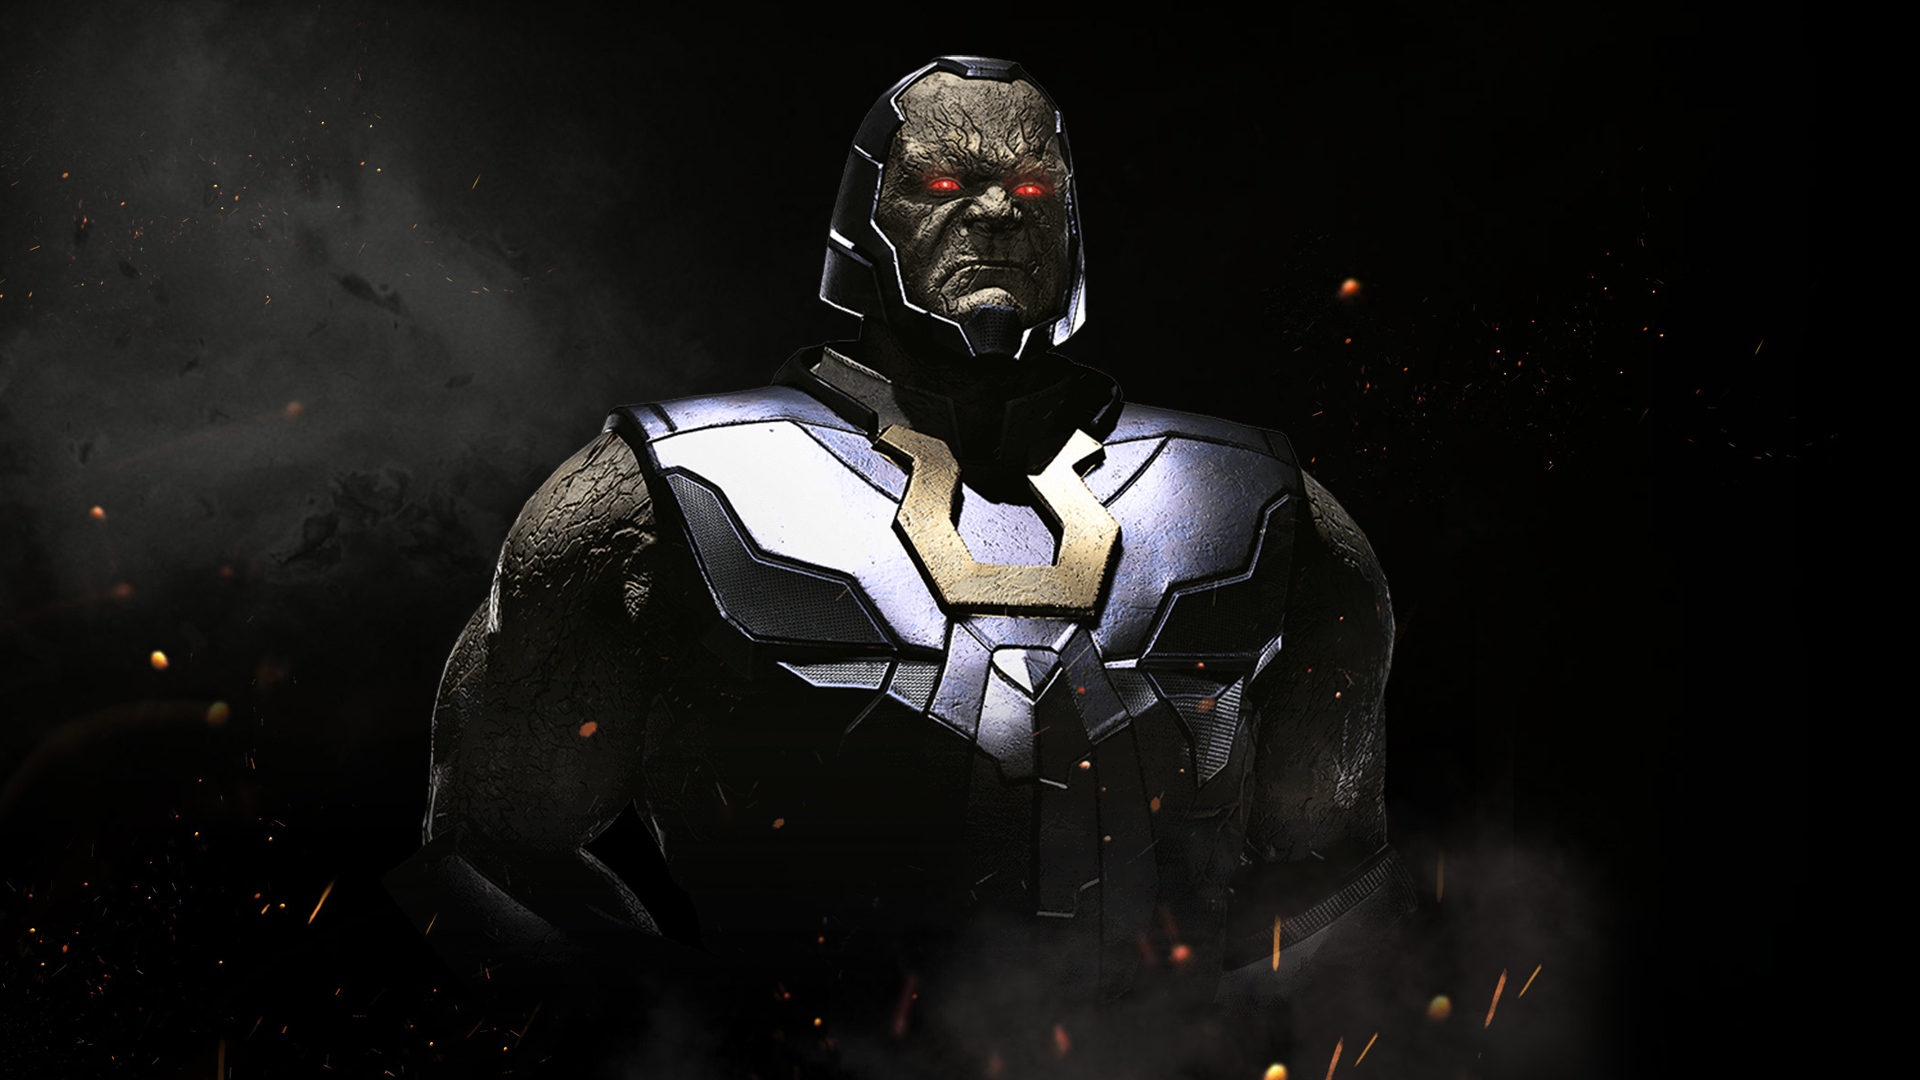 injustice 2, video game, darkseid (dc comics), injustice